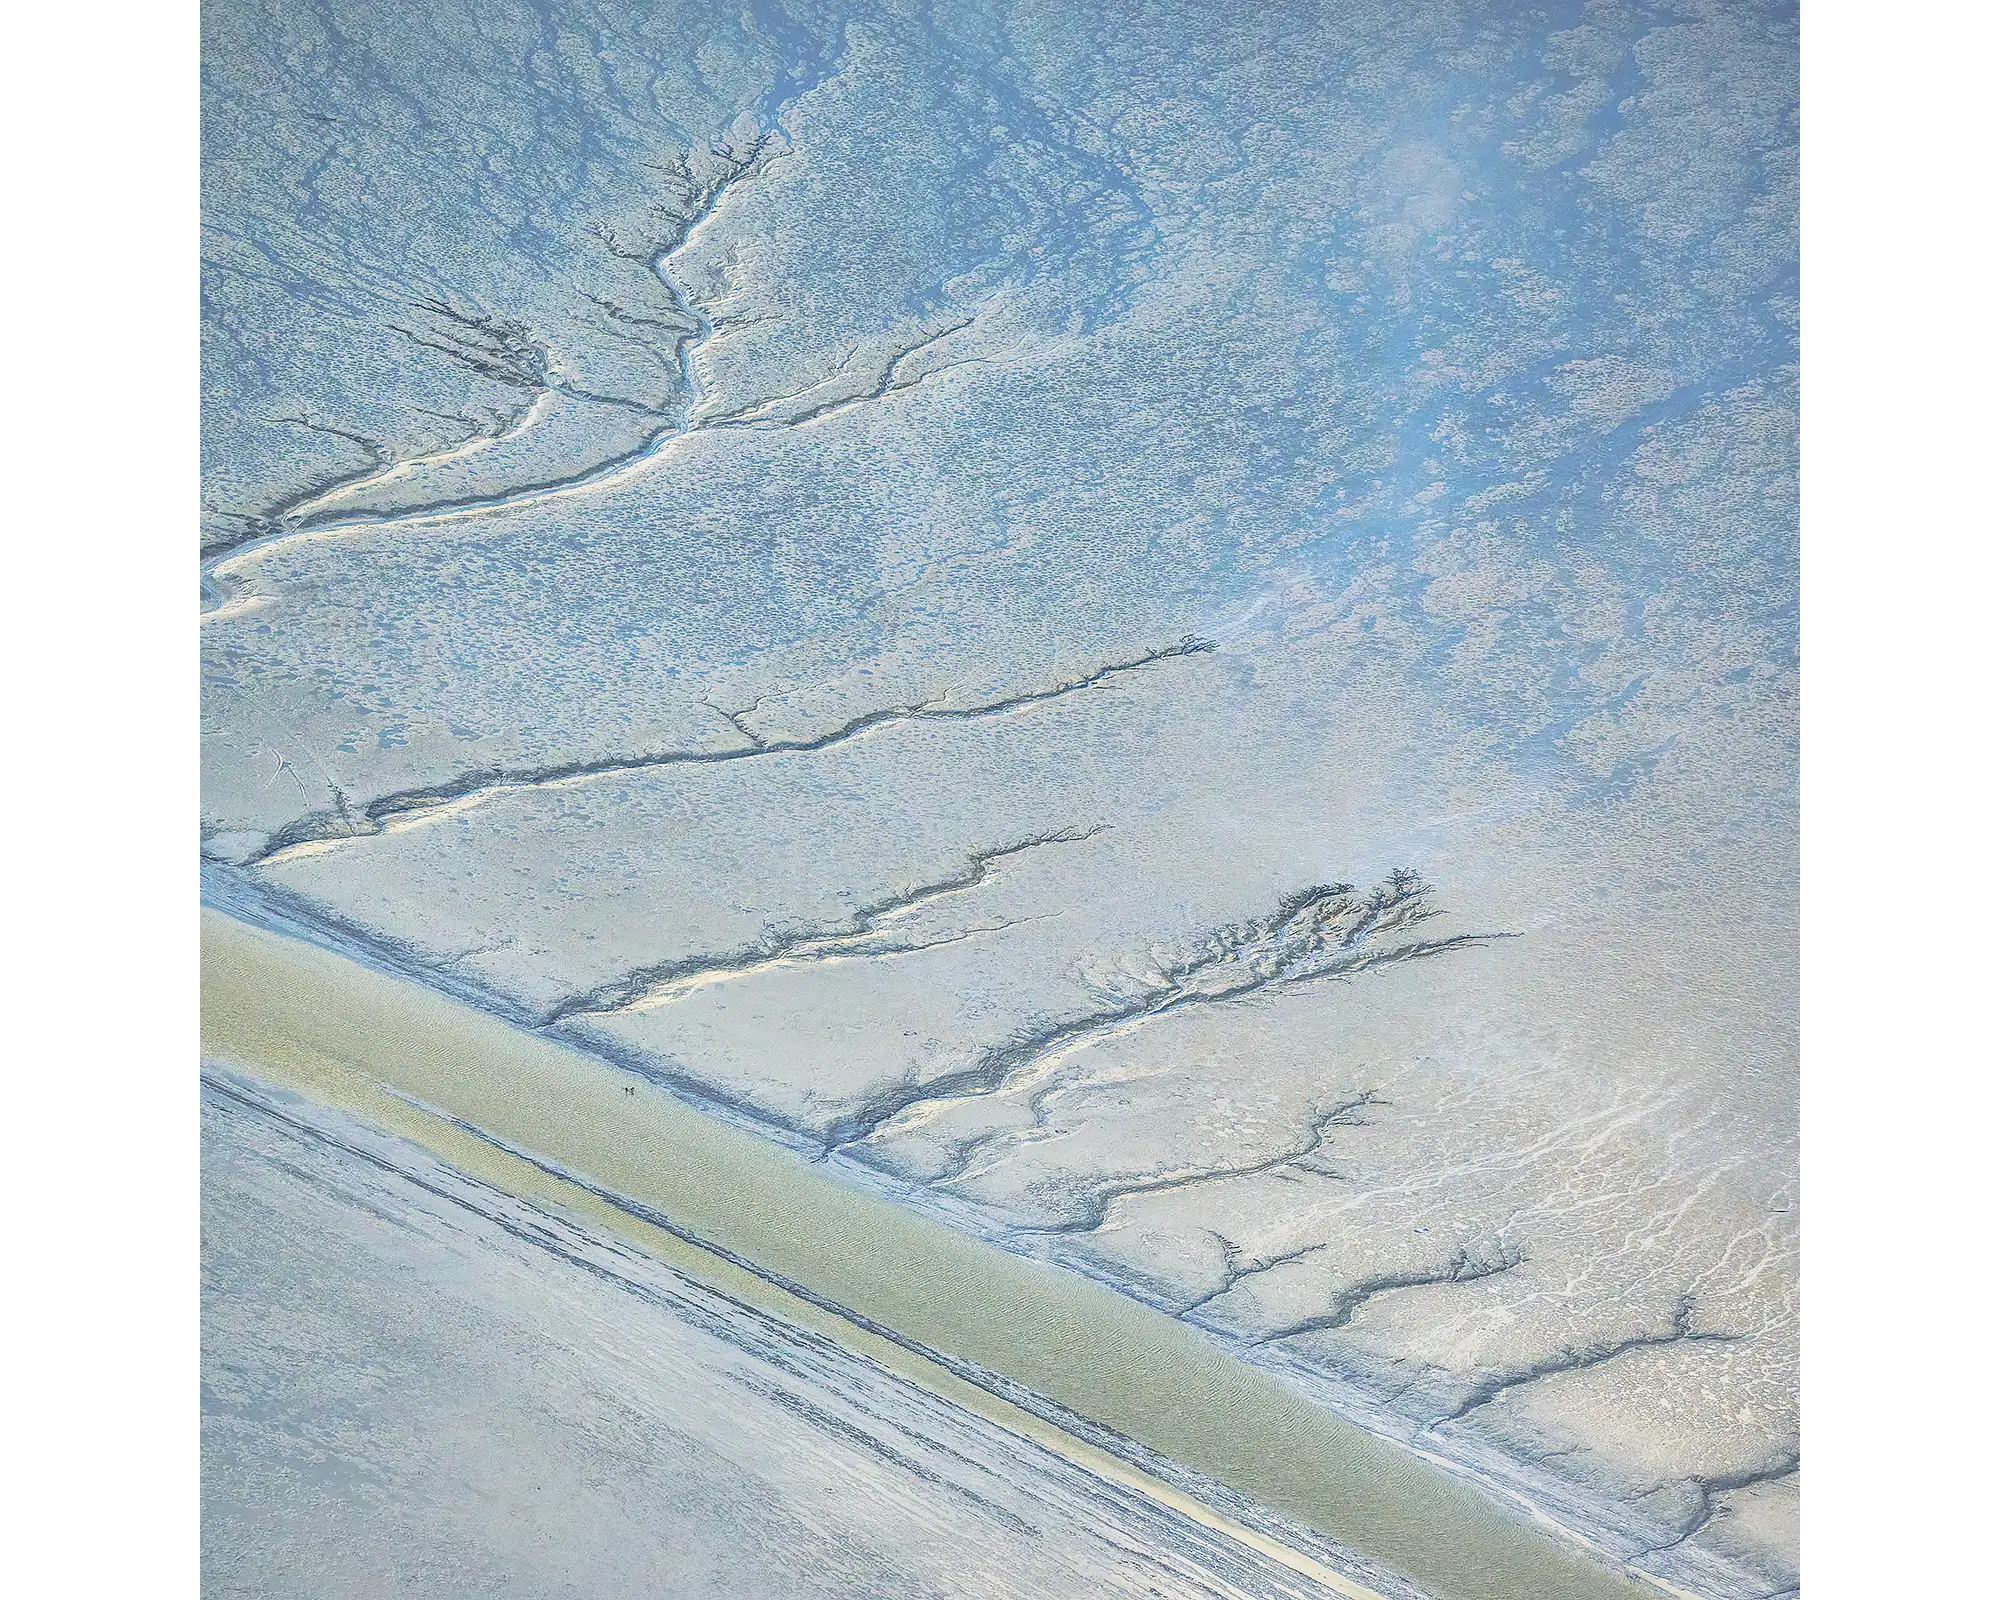 Tidal patterns in Crab Creek, the Kimberley, WA. 